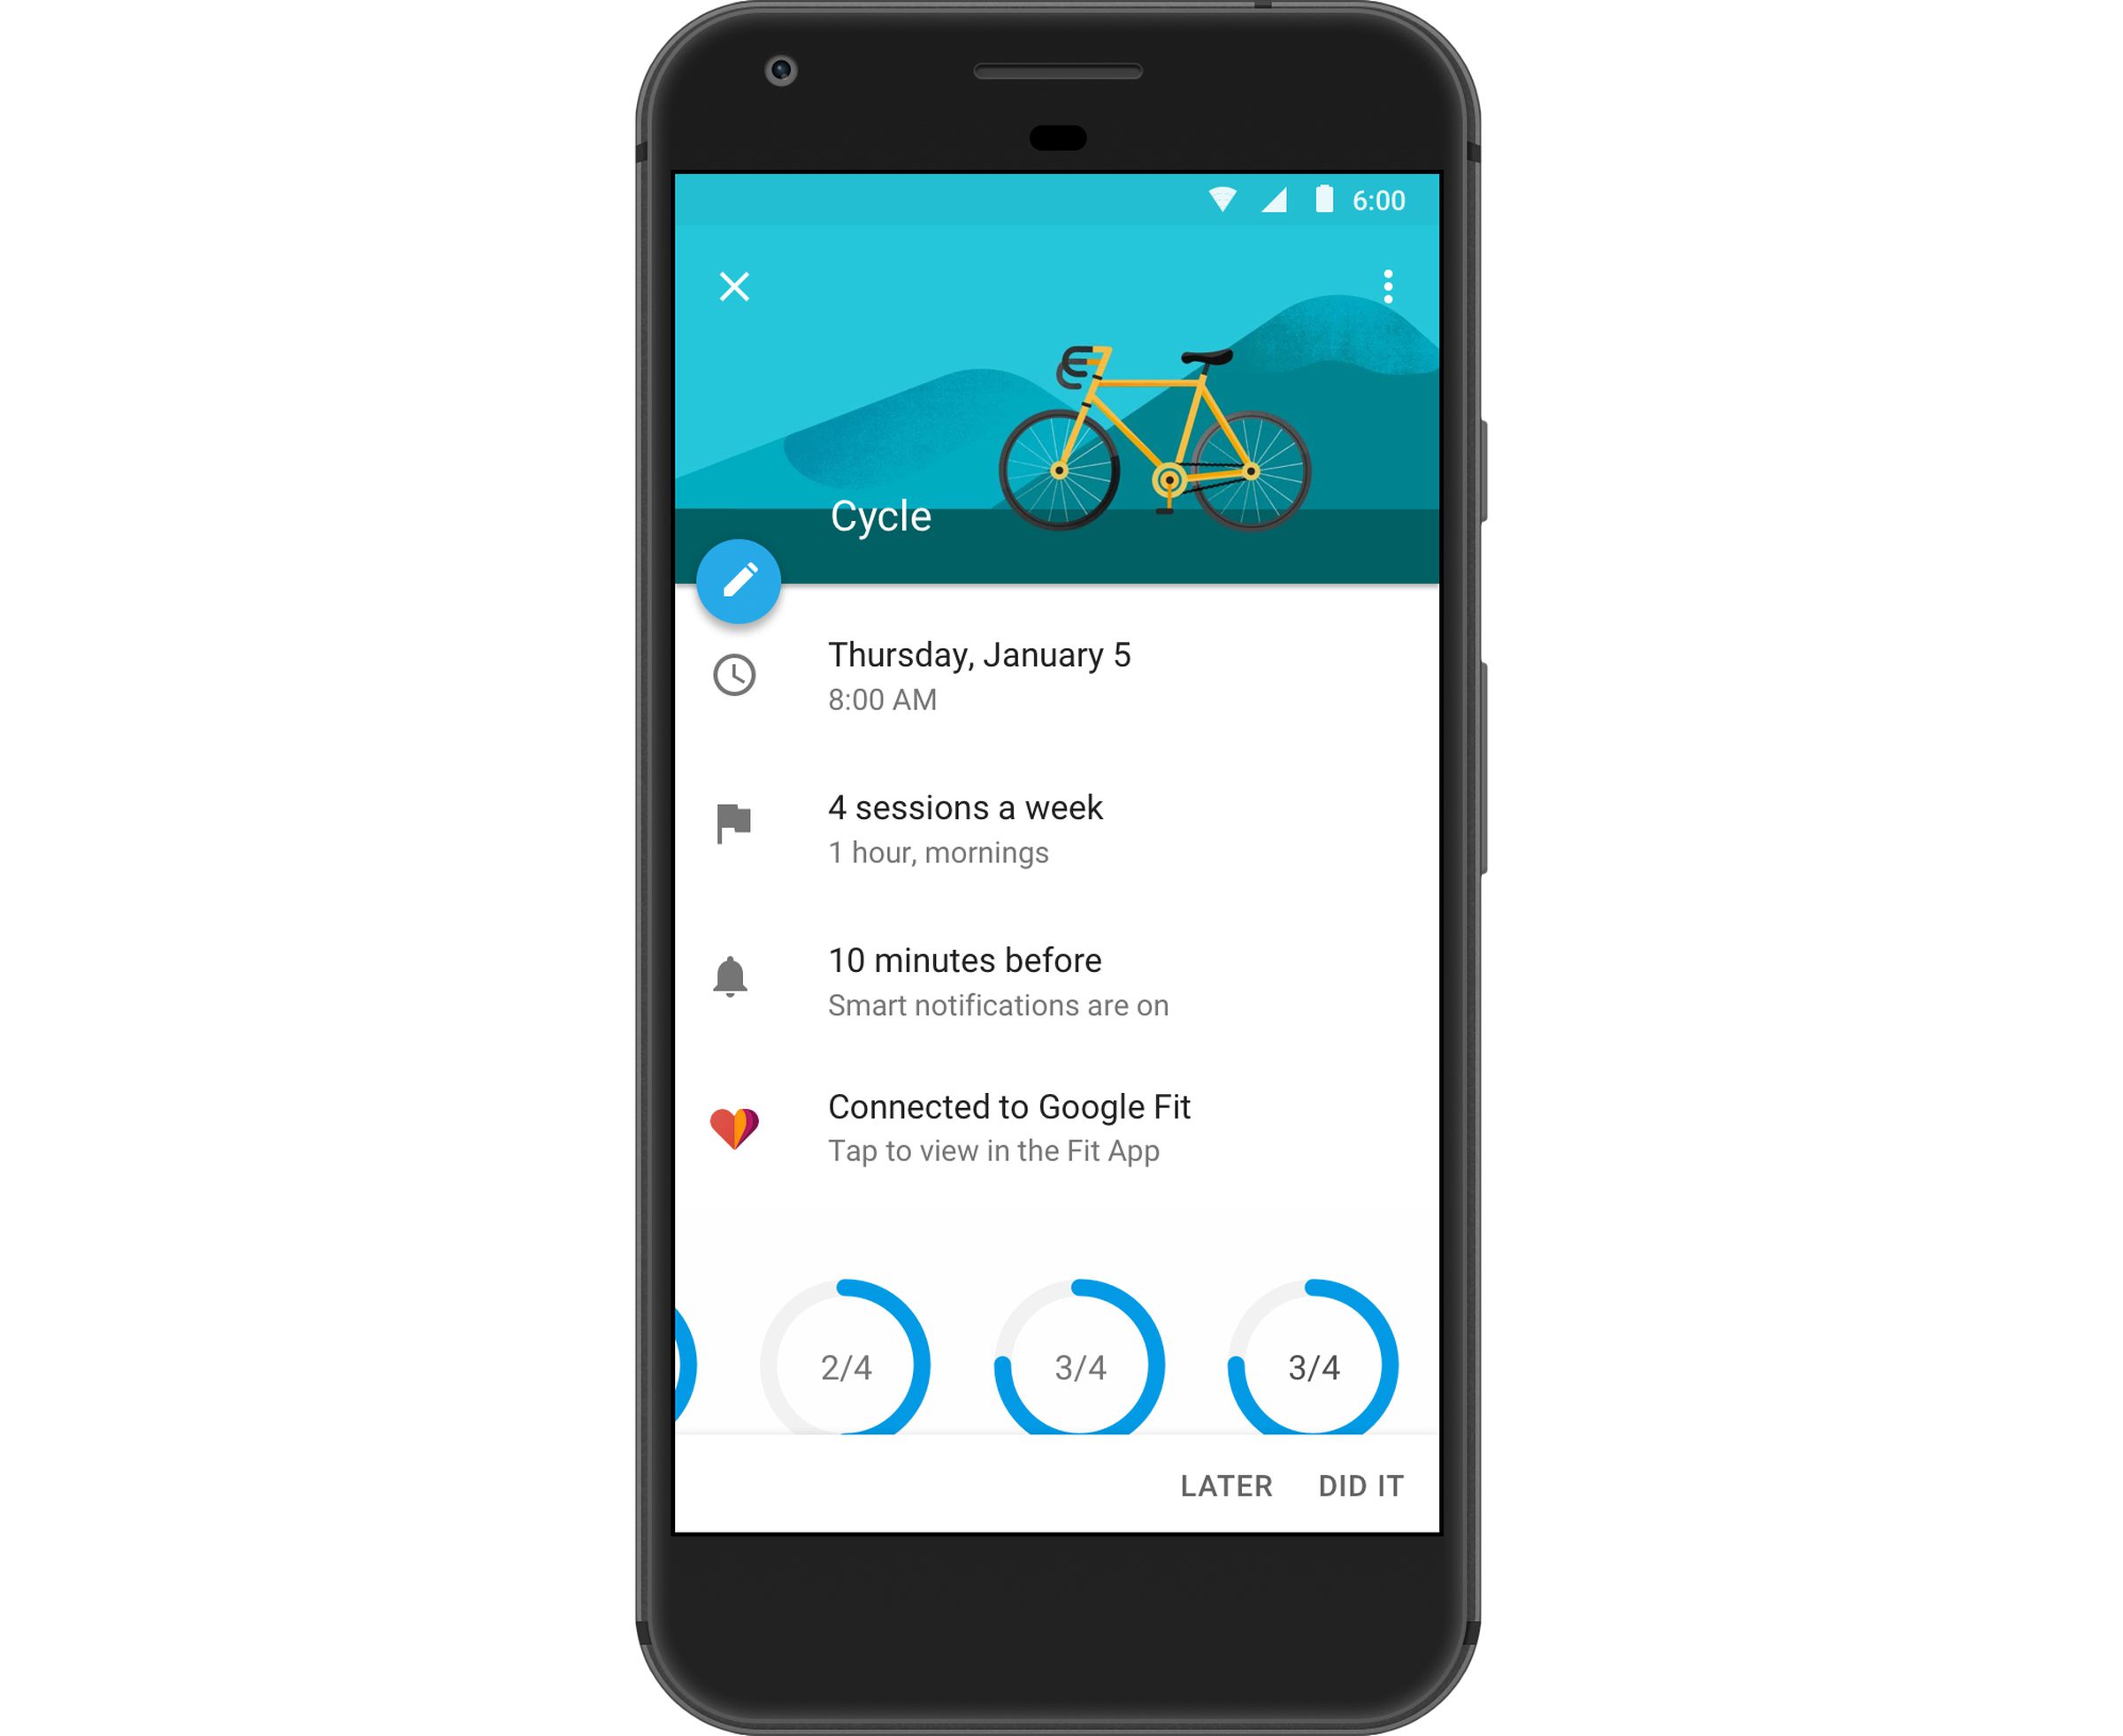 Here’s what health data looks like in the updated Google Calendar app. 